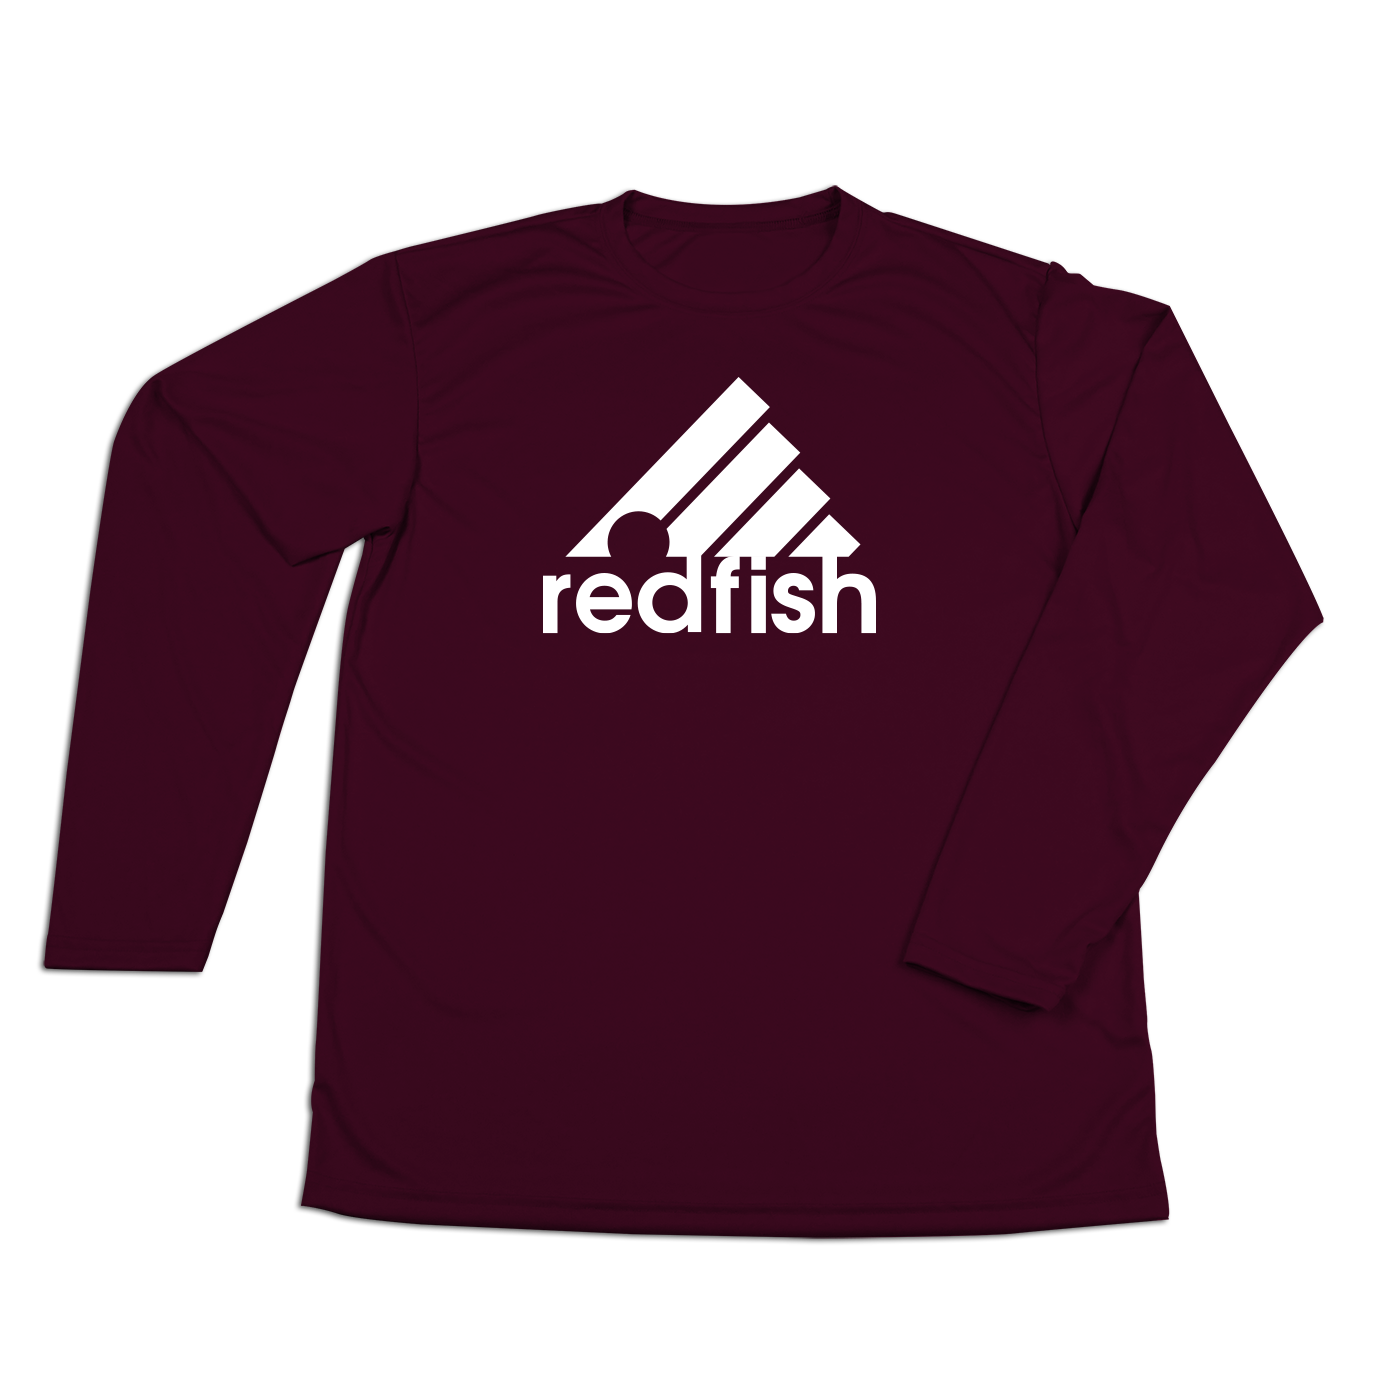 #REDFISH Performance Long Sleeve Shirt - Hat Mount for GoPro